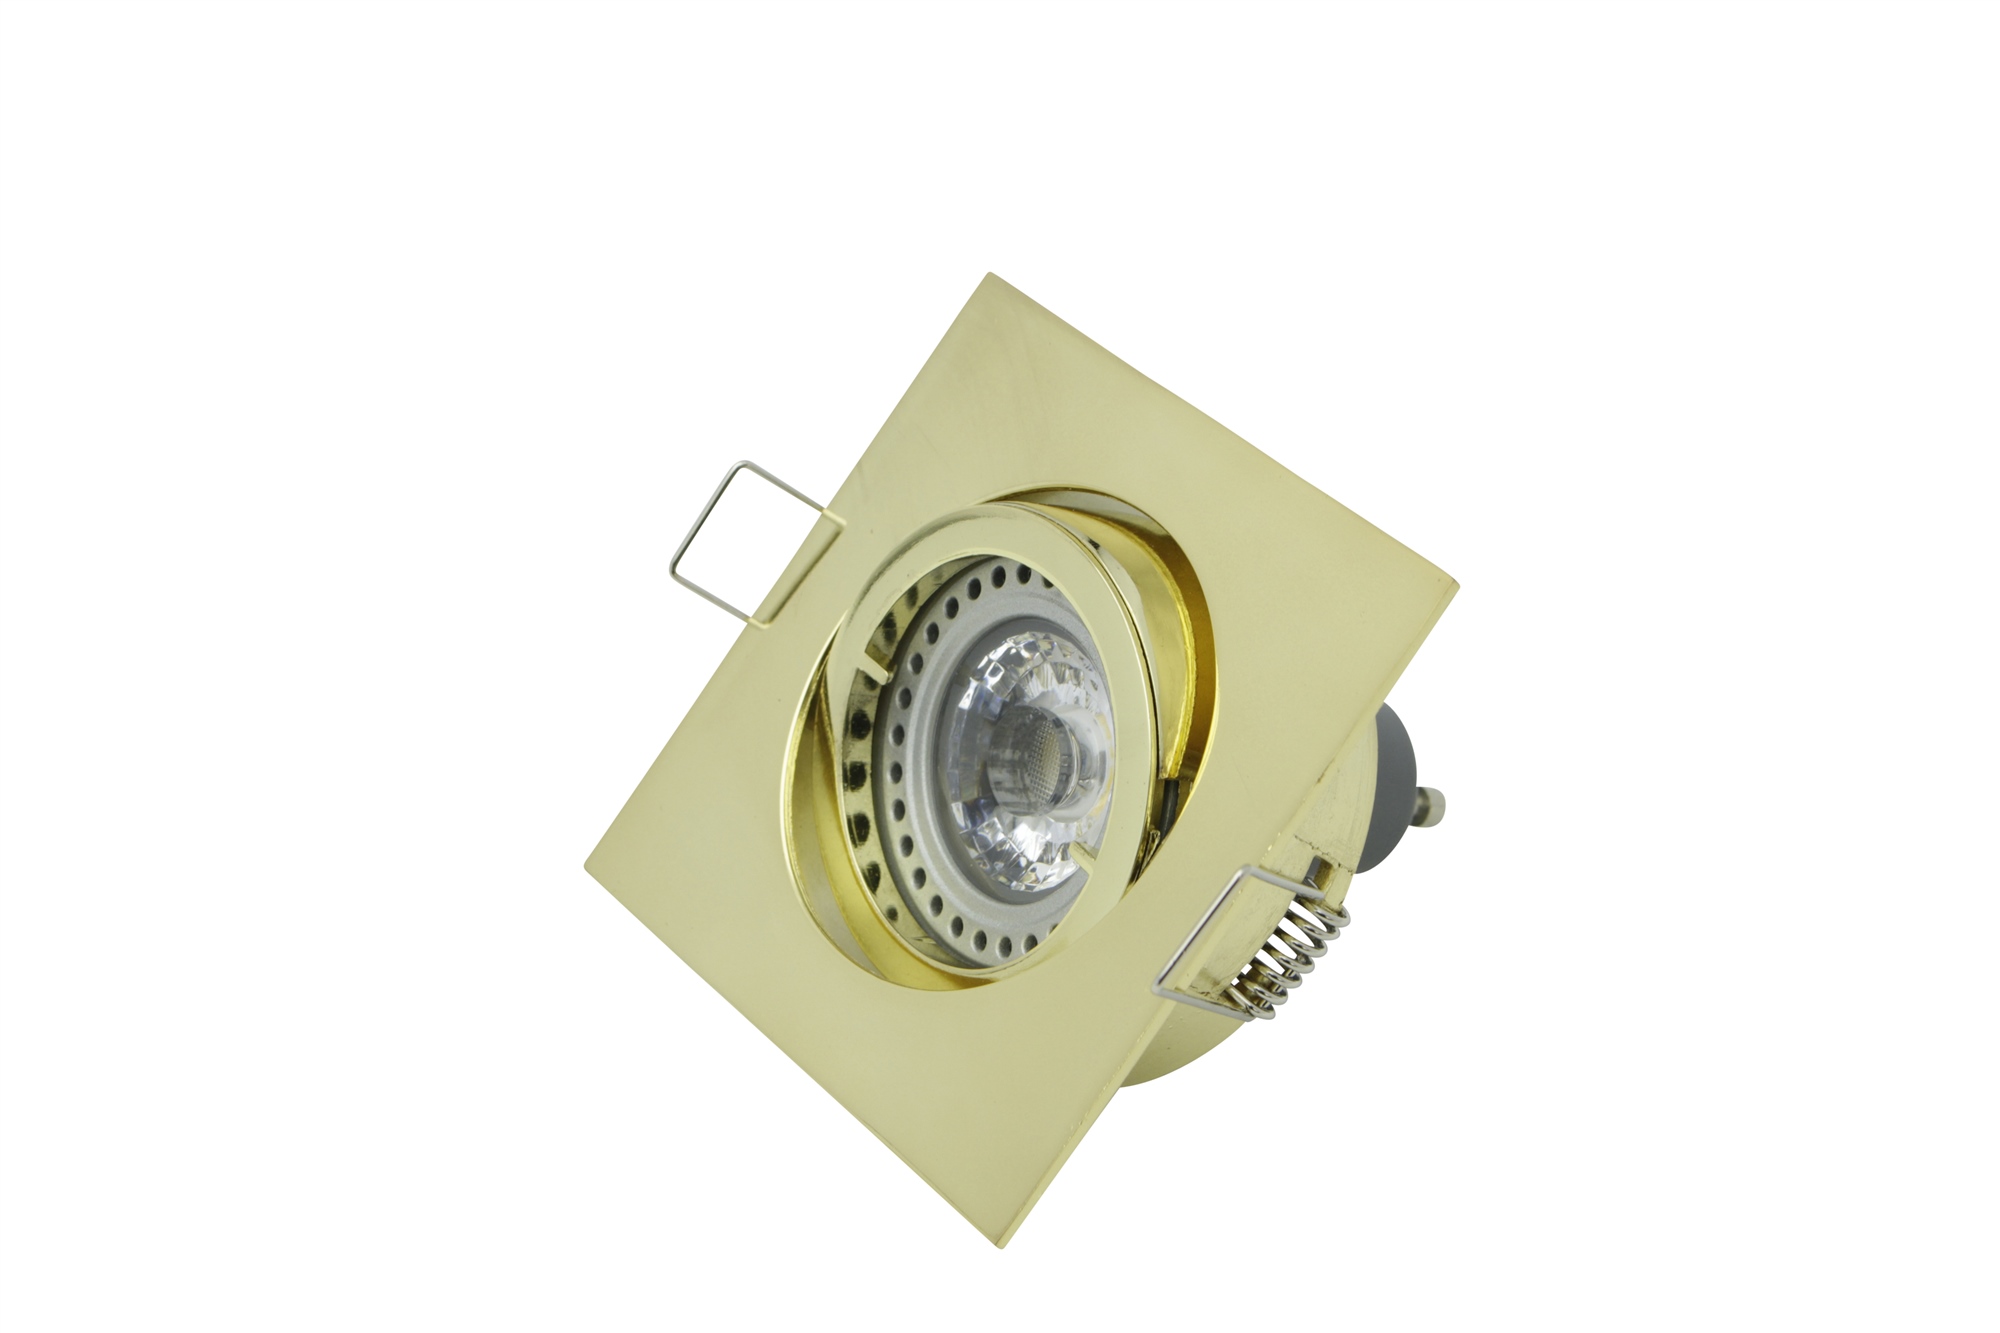 Lampenlux LED-Einbaustrahler Spot Snap eckig gold gebürstet schwenkbar 8.2x8.2cm 12V rostfrei Aluminium